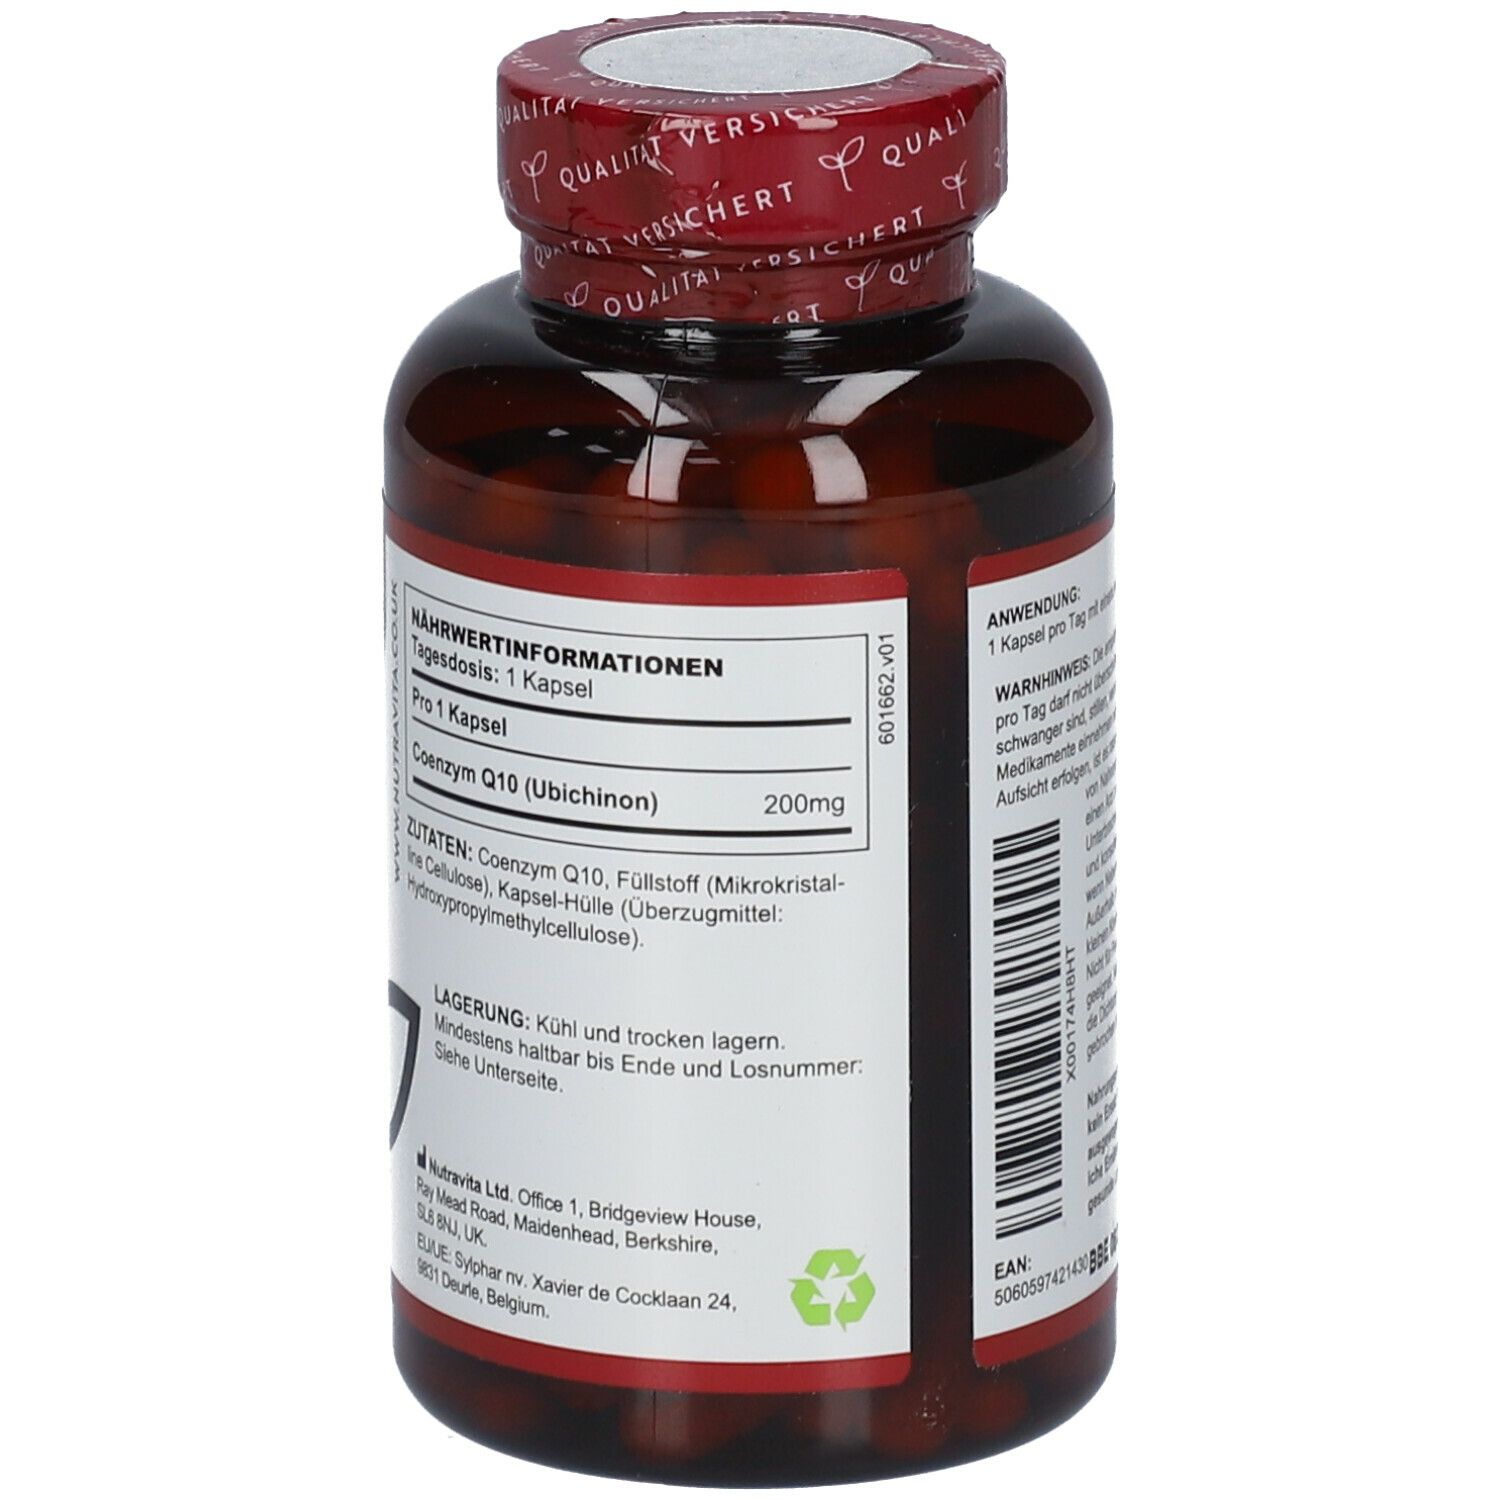 Nutravita 200 mg Coenzym Q10 hochdosiert vegan